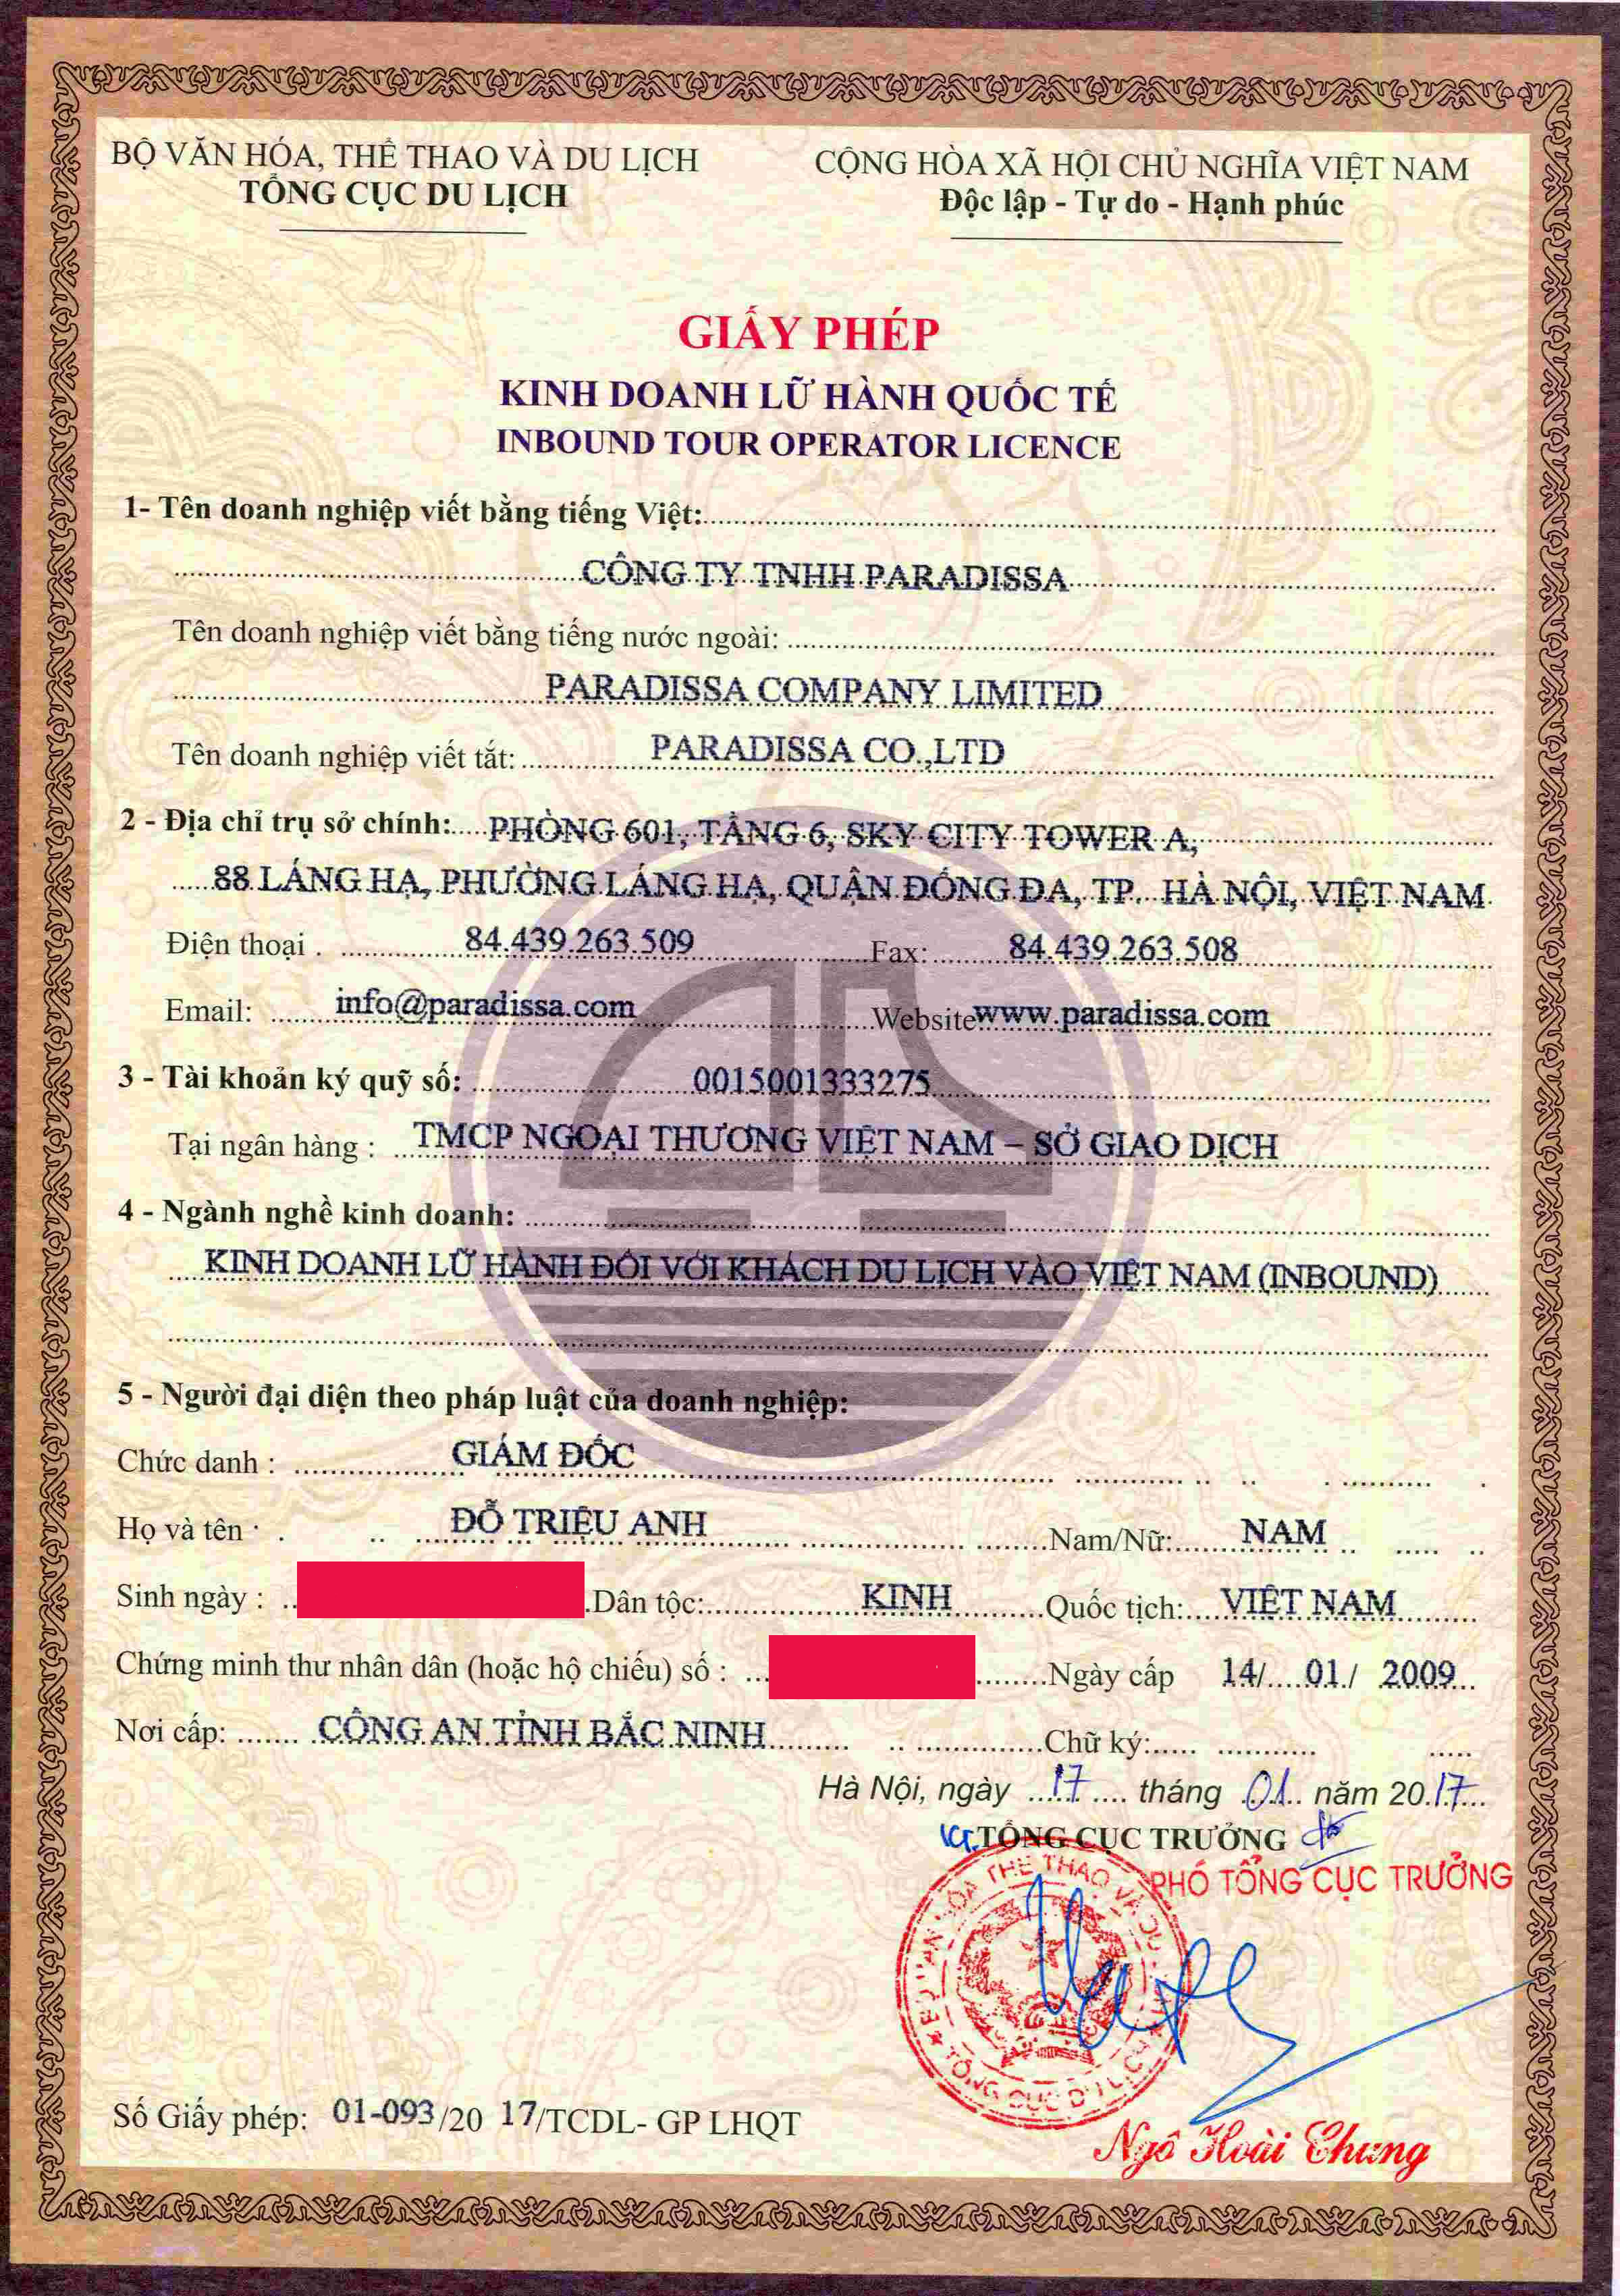 Vietnam Tour Operator License